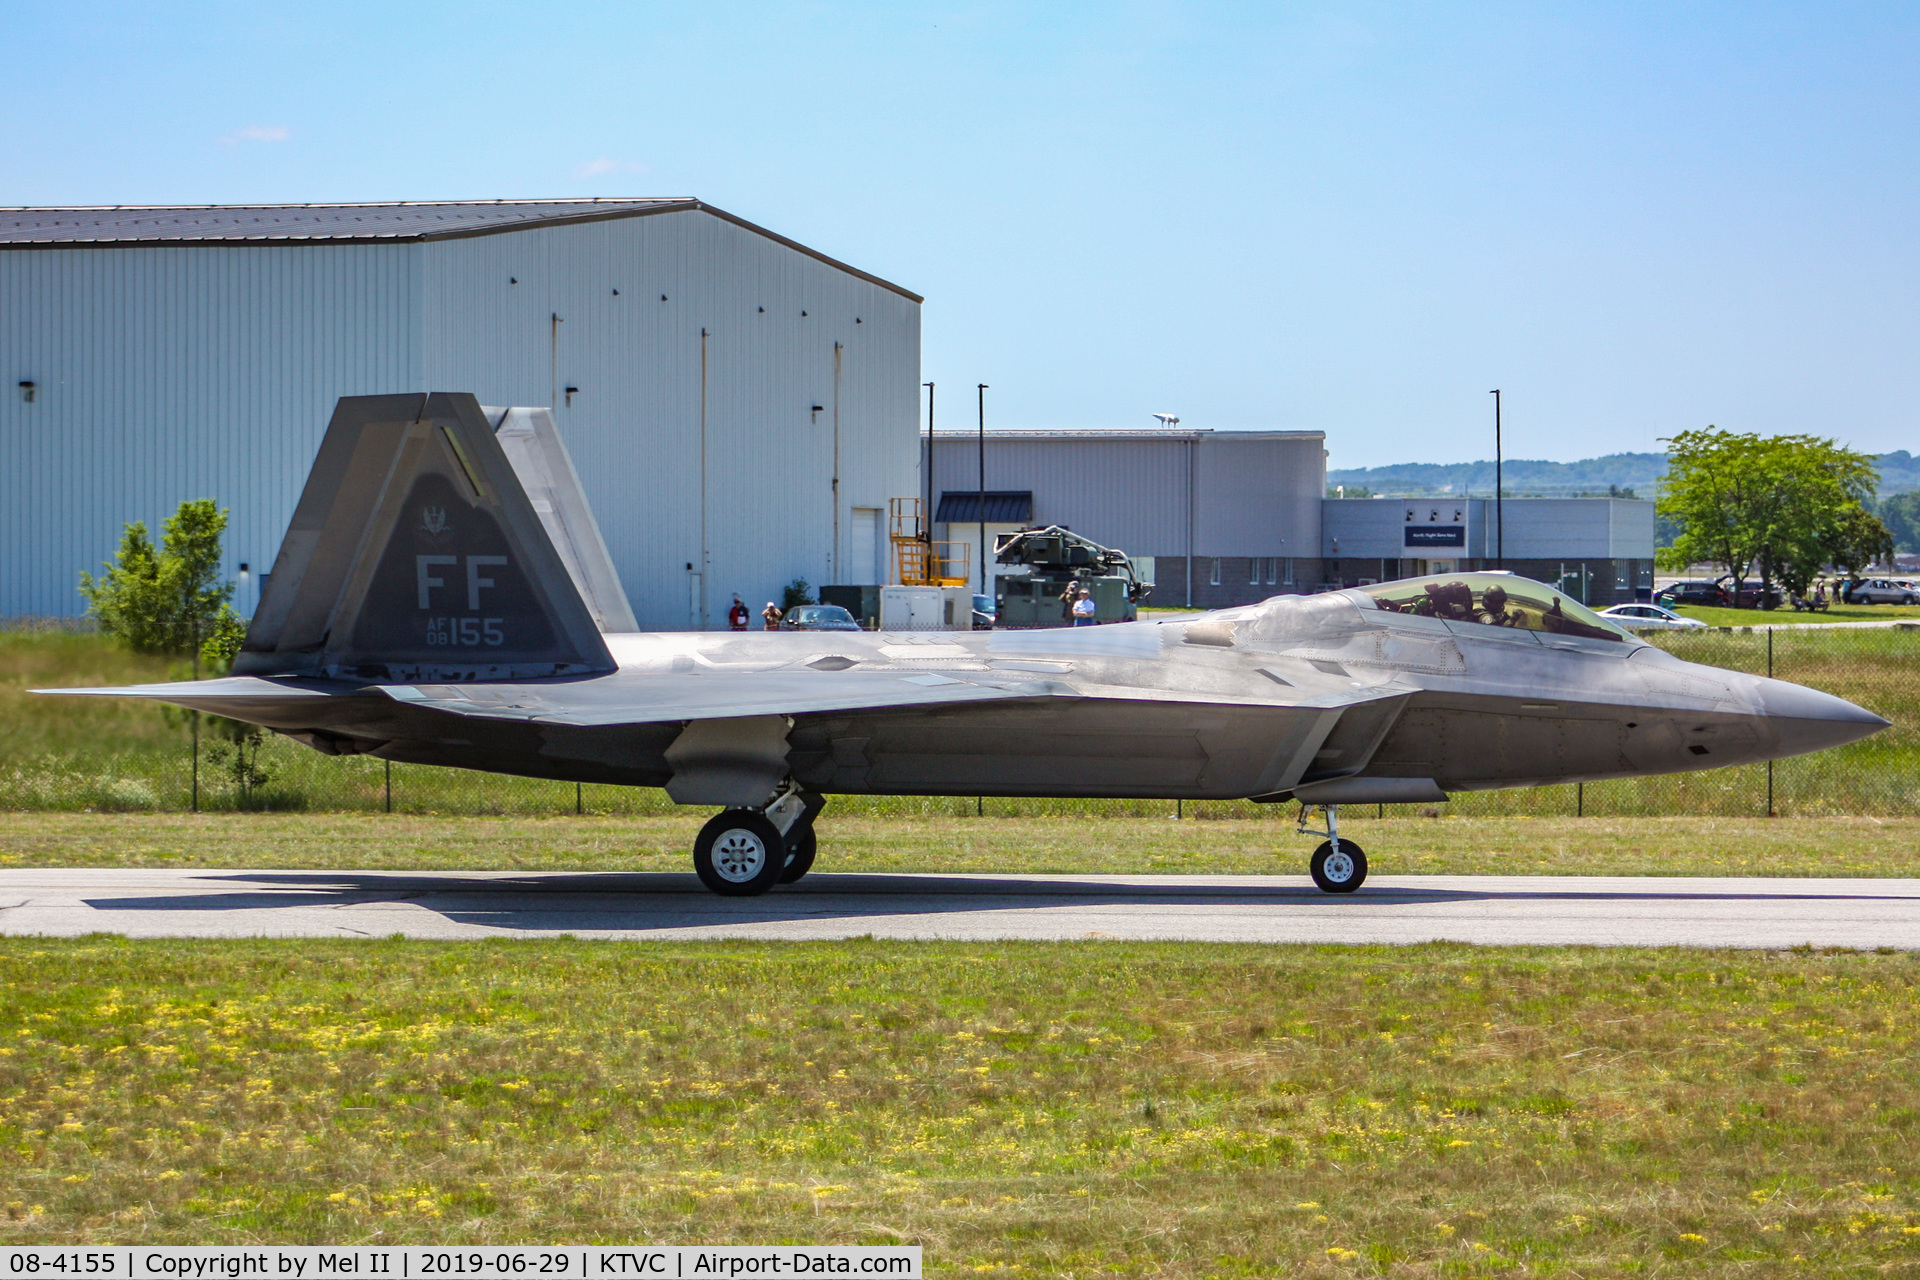 08-4155, 2008 Lockheed Martin F-22A Raptor C/N 4155, 2019 National Cherry Festival Air Show